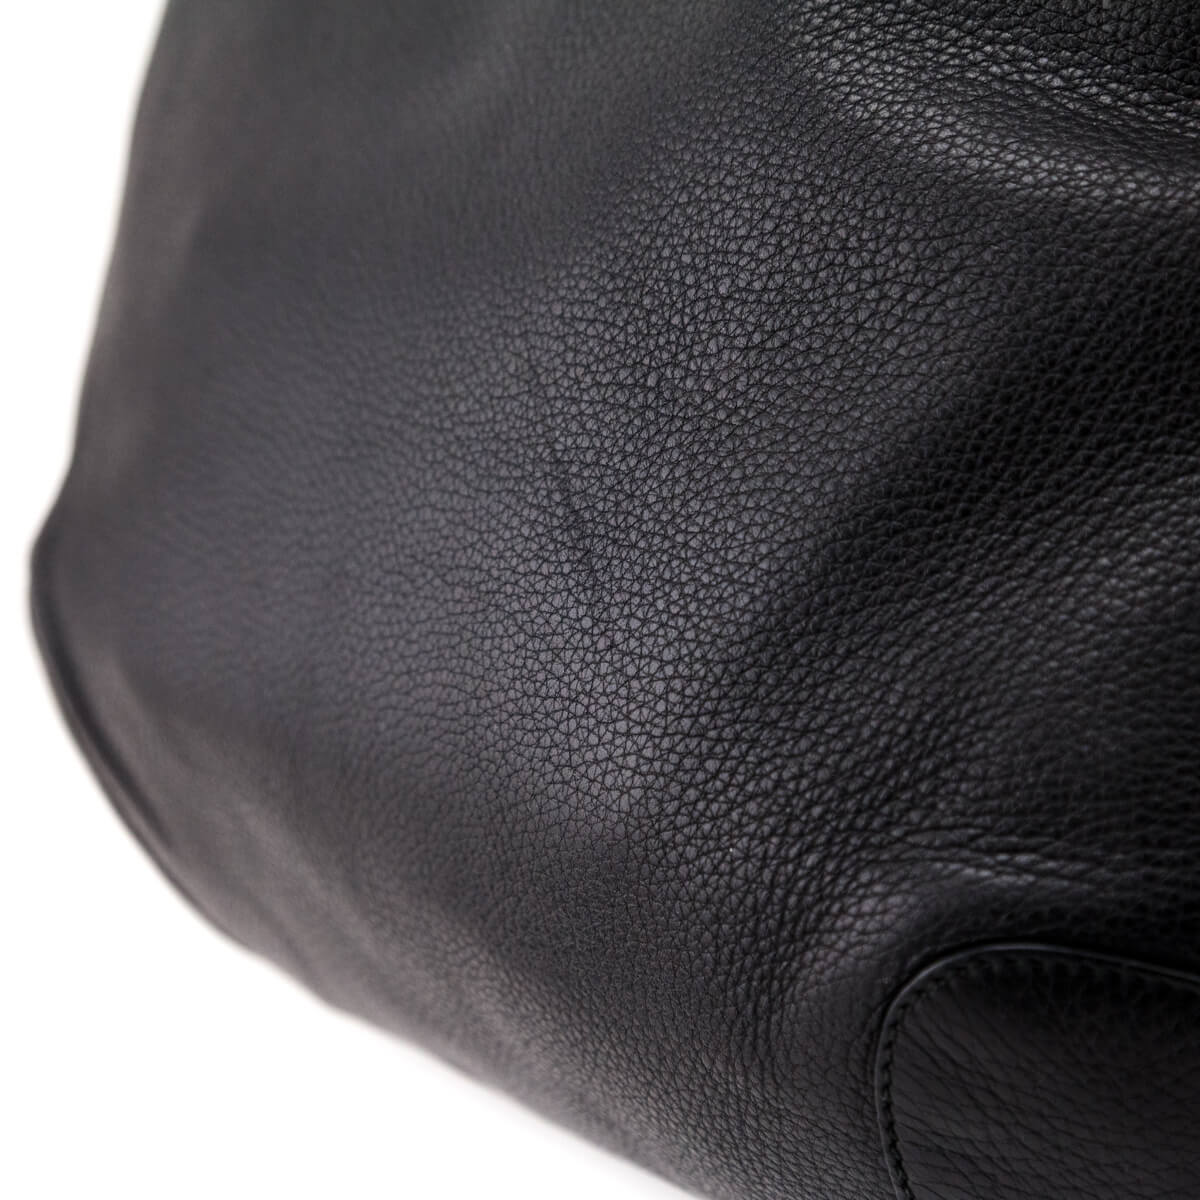 Gucci Black Pebbled Calfskin Soho Chain Hobo - Love that Bag etc - Preowned Authentic Designer Handbags & Preloved Fashions